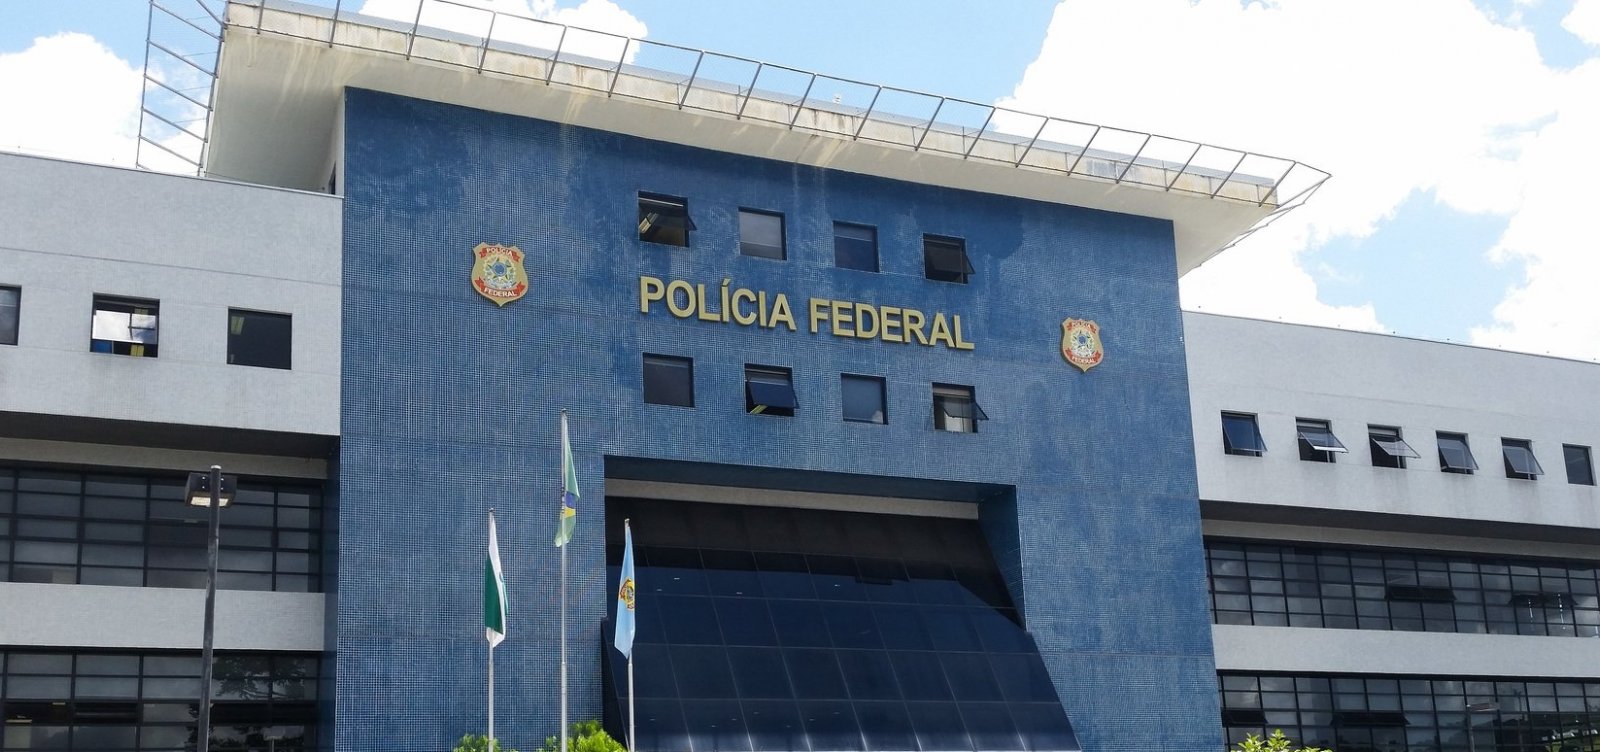 Após decreto que facilita porte de armas, Polícia Federal teme sobrecarga